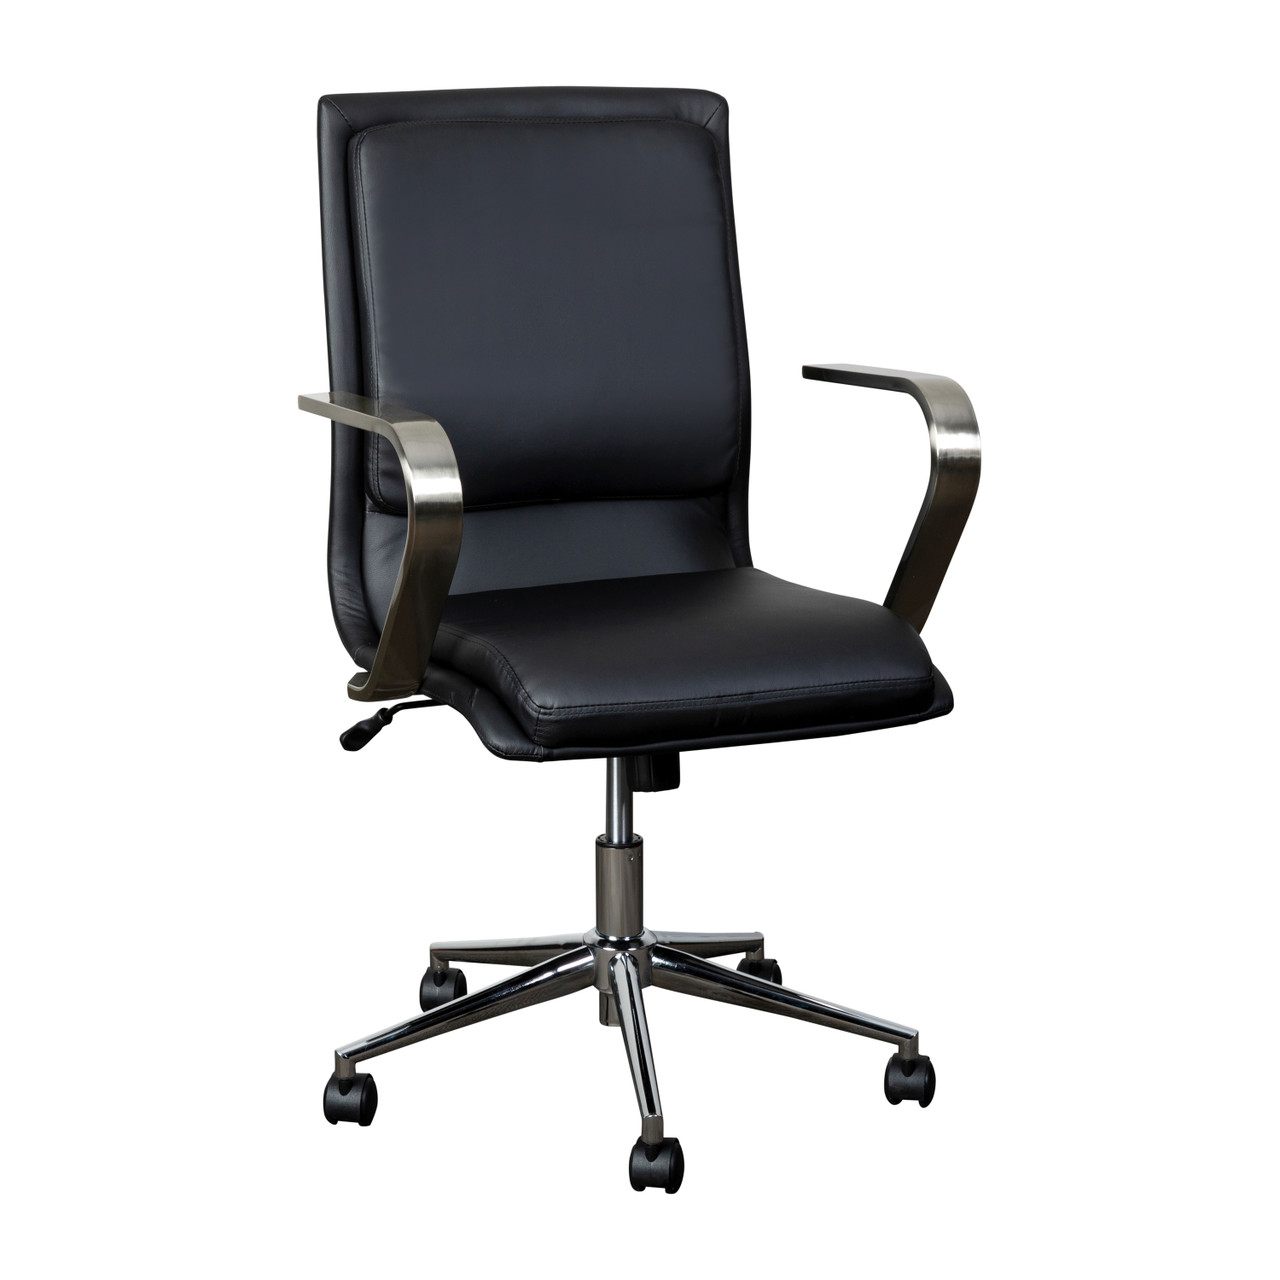 Flash Furniture James Mid-Back Designer Executive LeatherSoft Office Chair w/ Brushed Chrome Base & Arms, Black, Model# GO-21111B-BK-CHR-GG